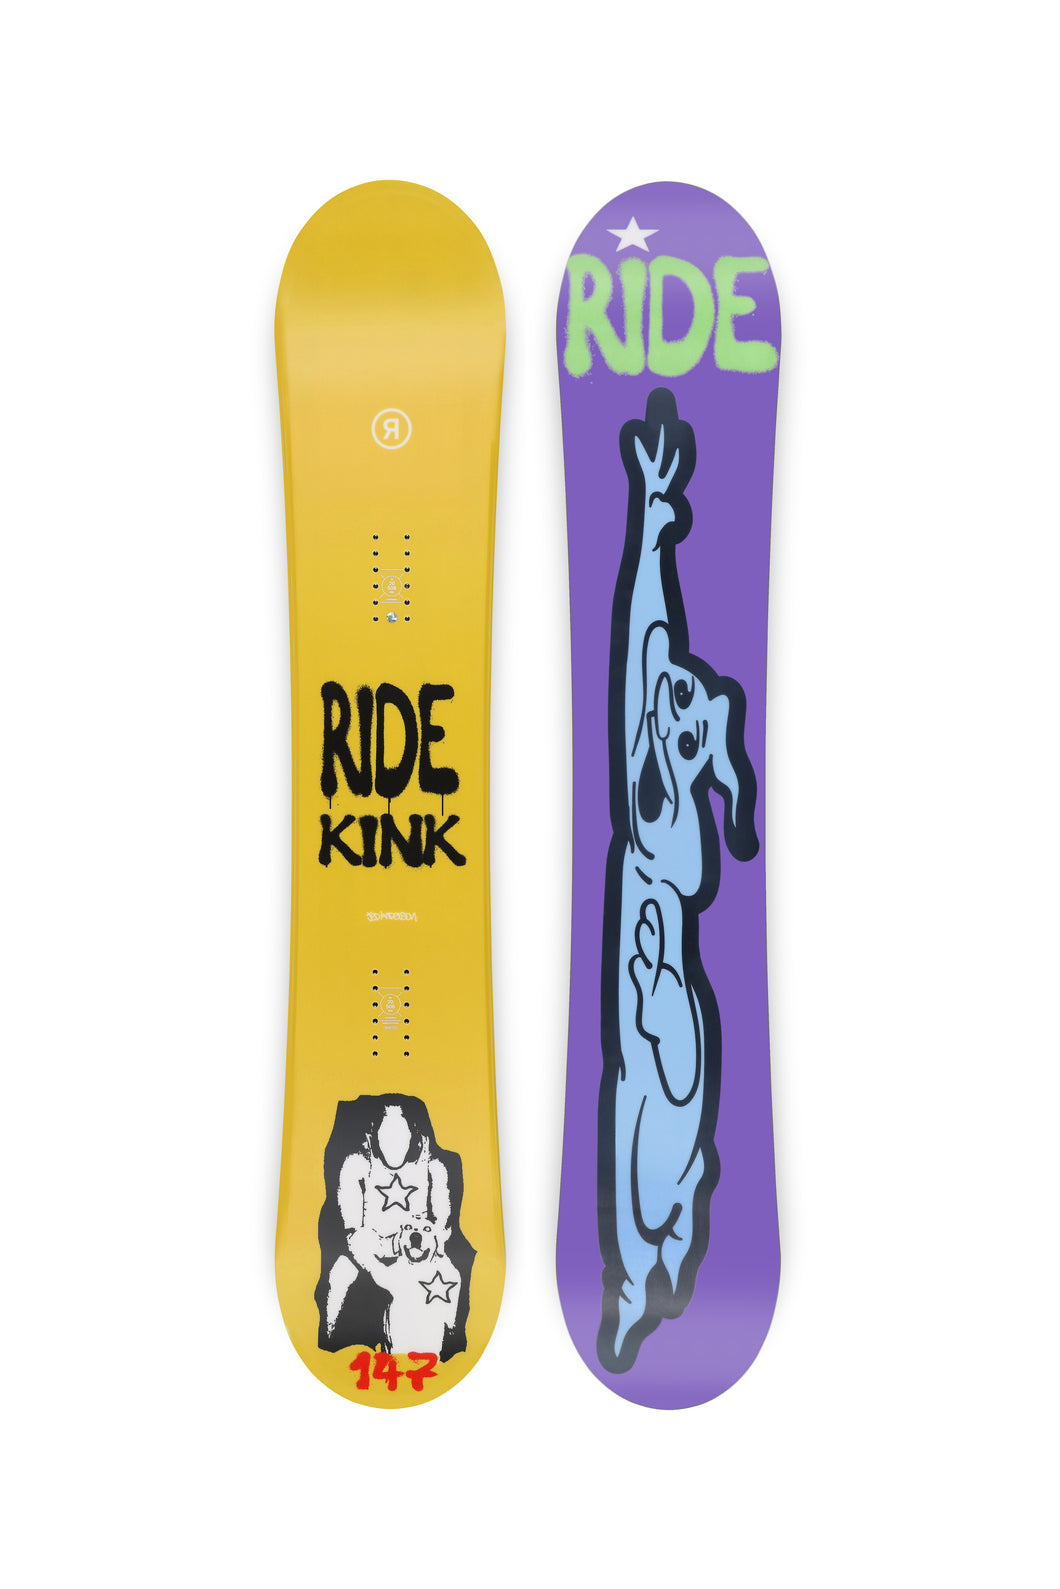 Ride - Kink